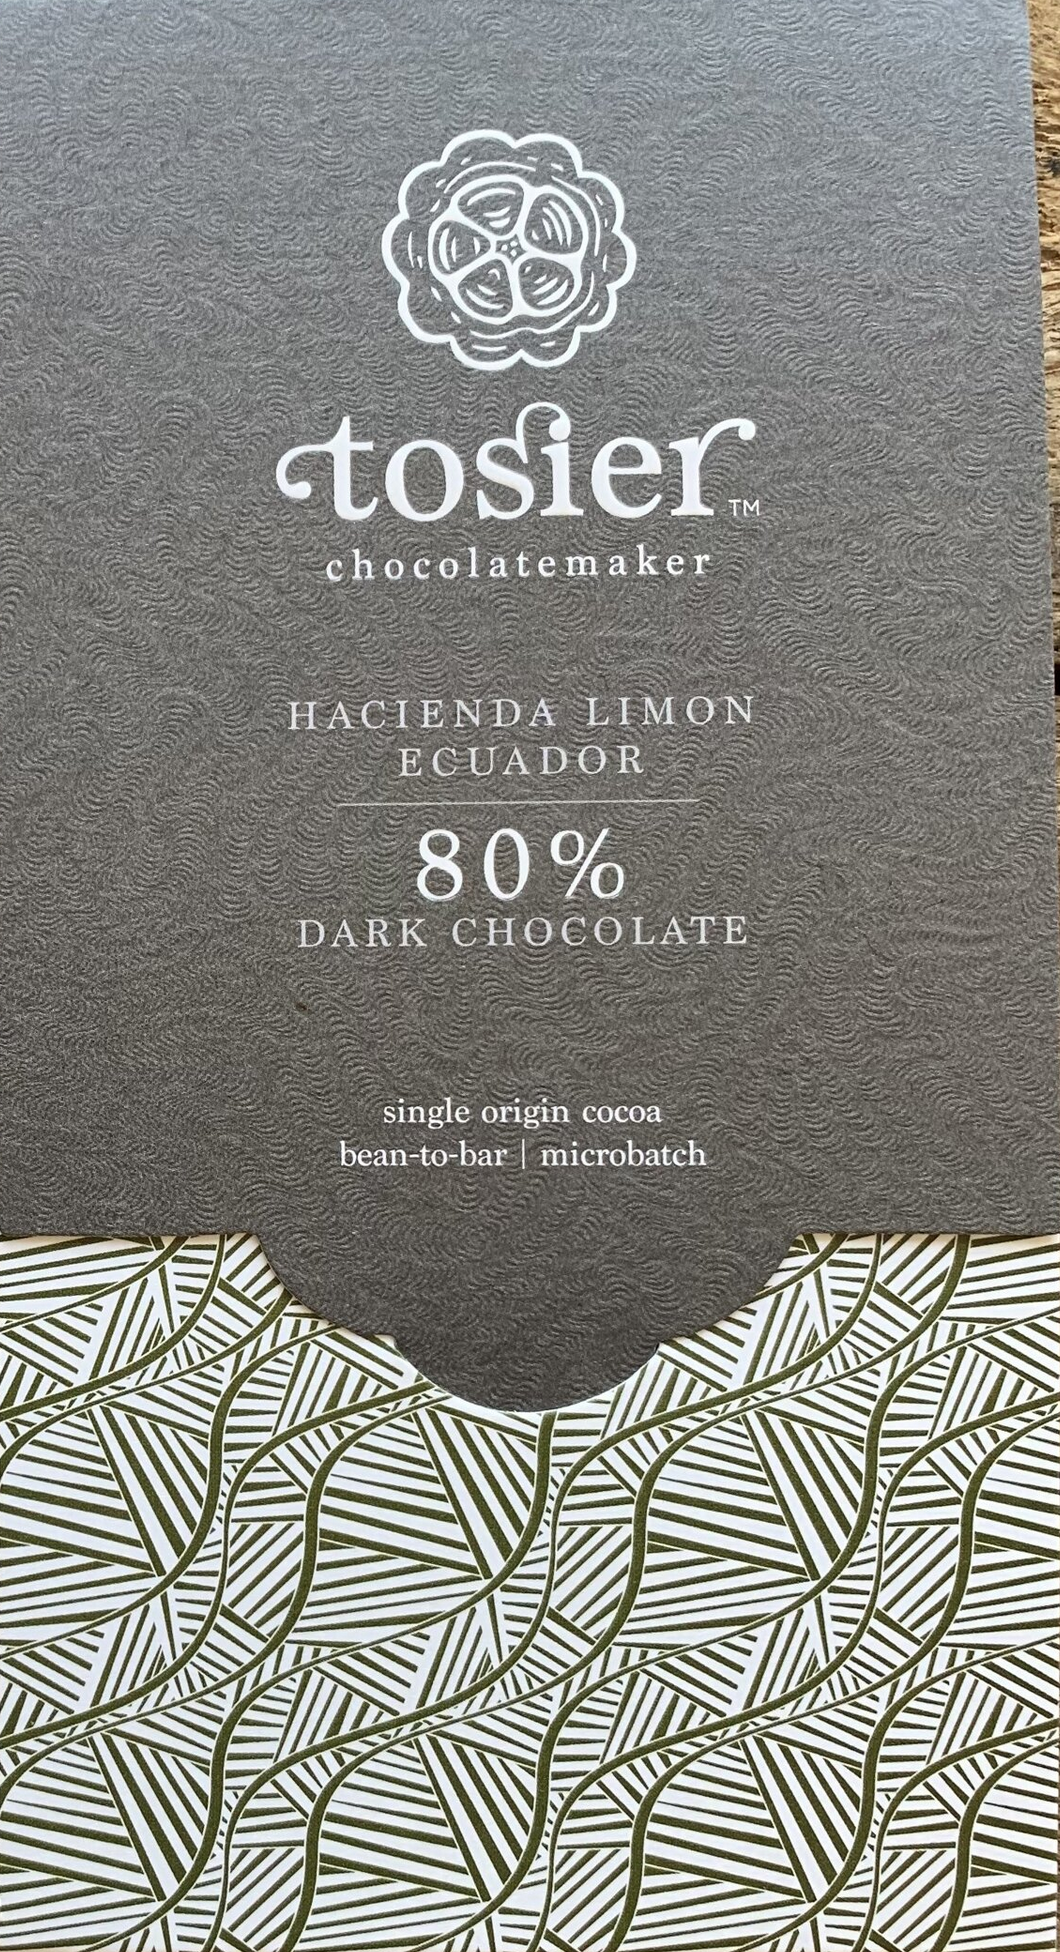 TOSIER | Dunkle Schokolade »Hacienda Limon Ecuador« 80% | 60g MHD 30.09.2022